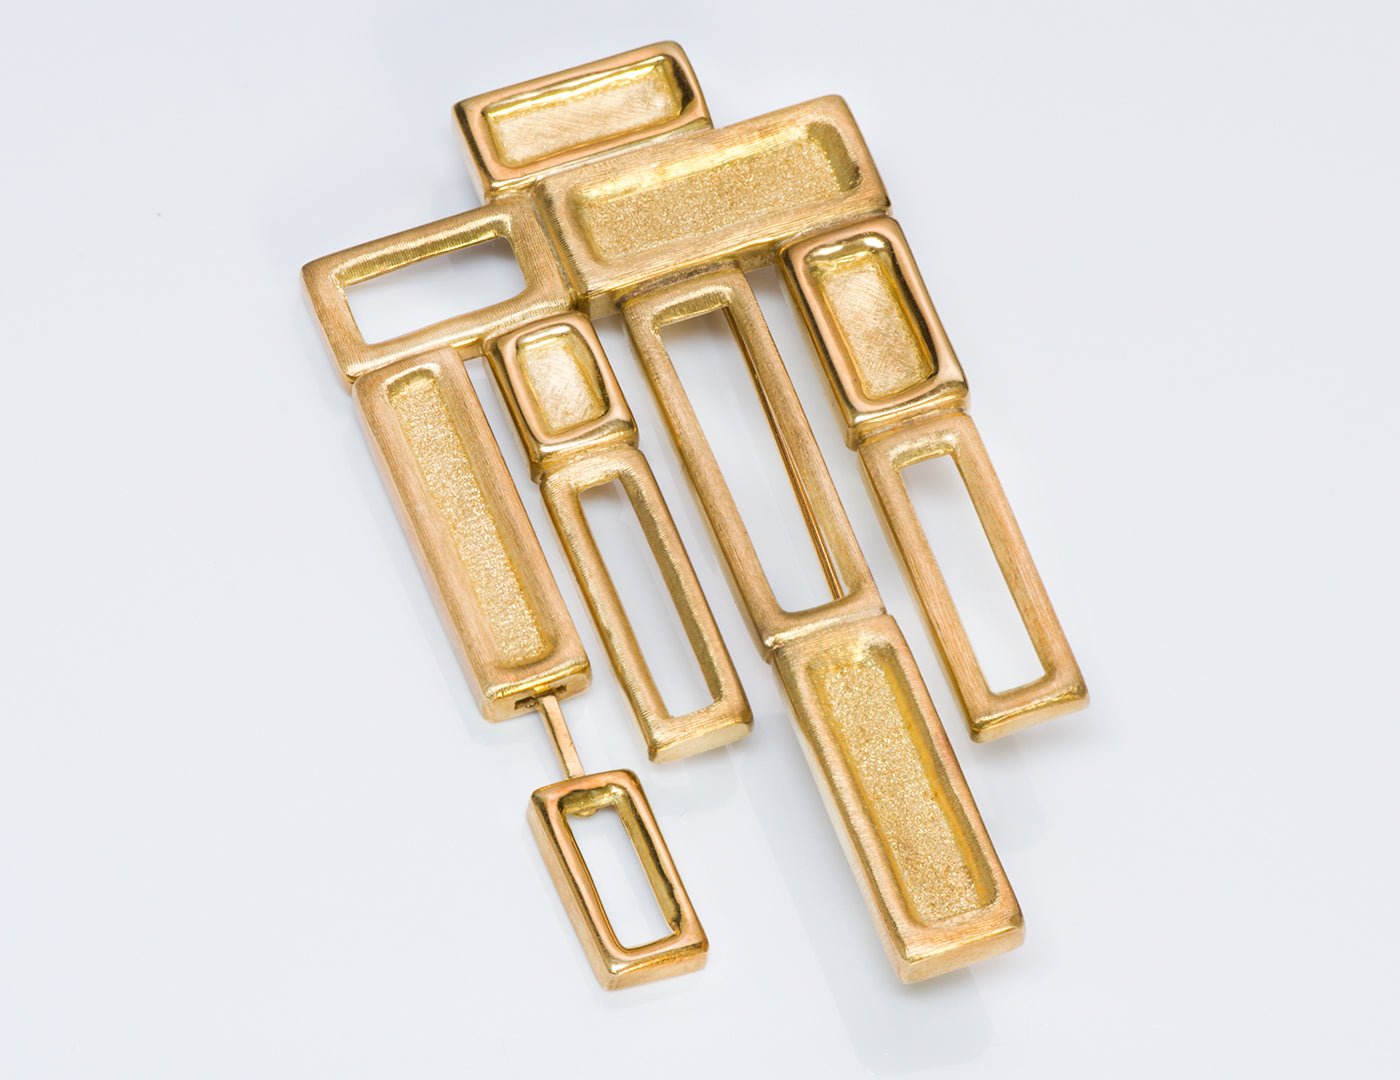 Burle Marx 18K Gold Aquamarine Amethyst Necklace Brooch Ring